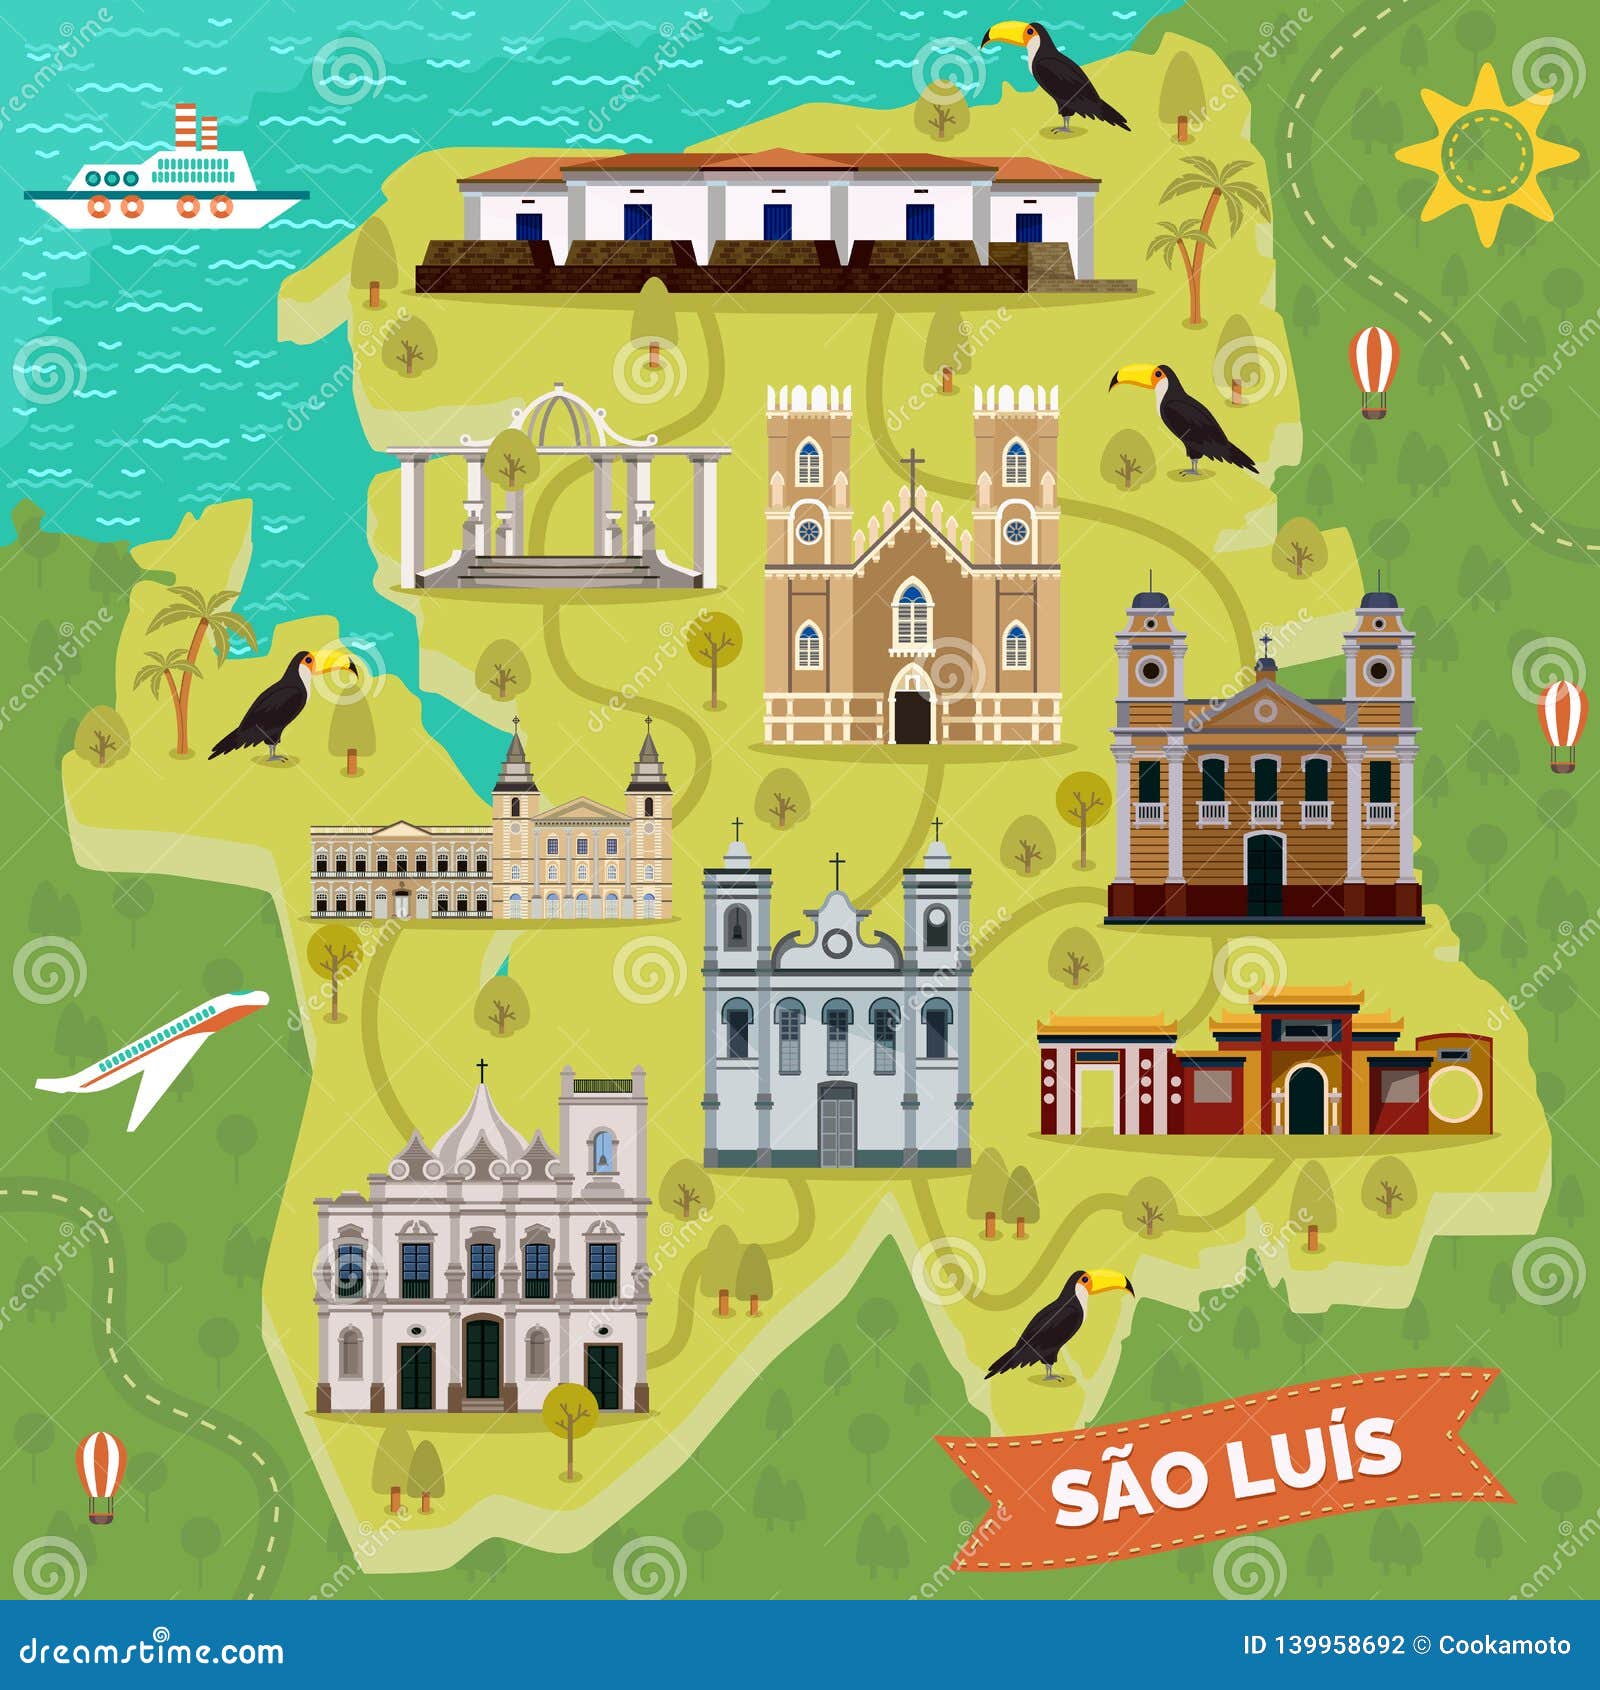 landmarks on map of sao luis. brazil sightseeing